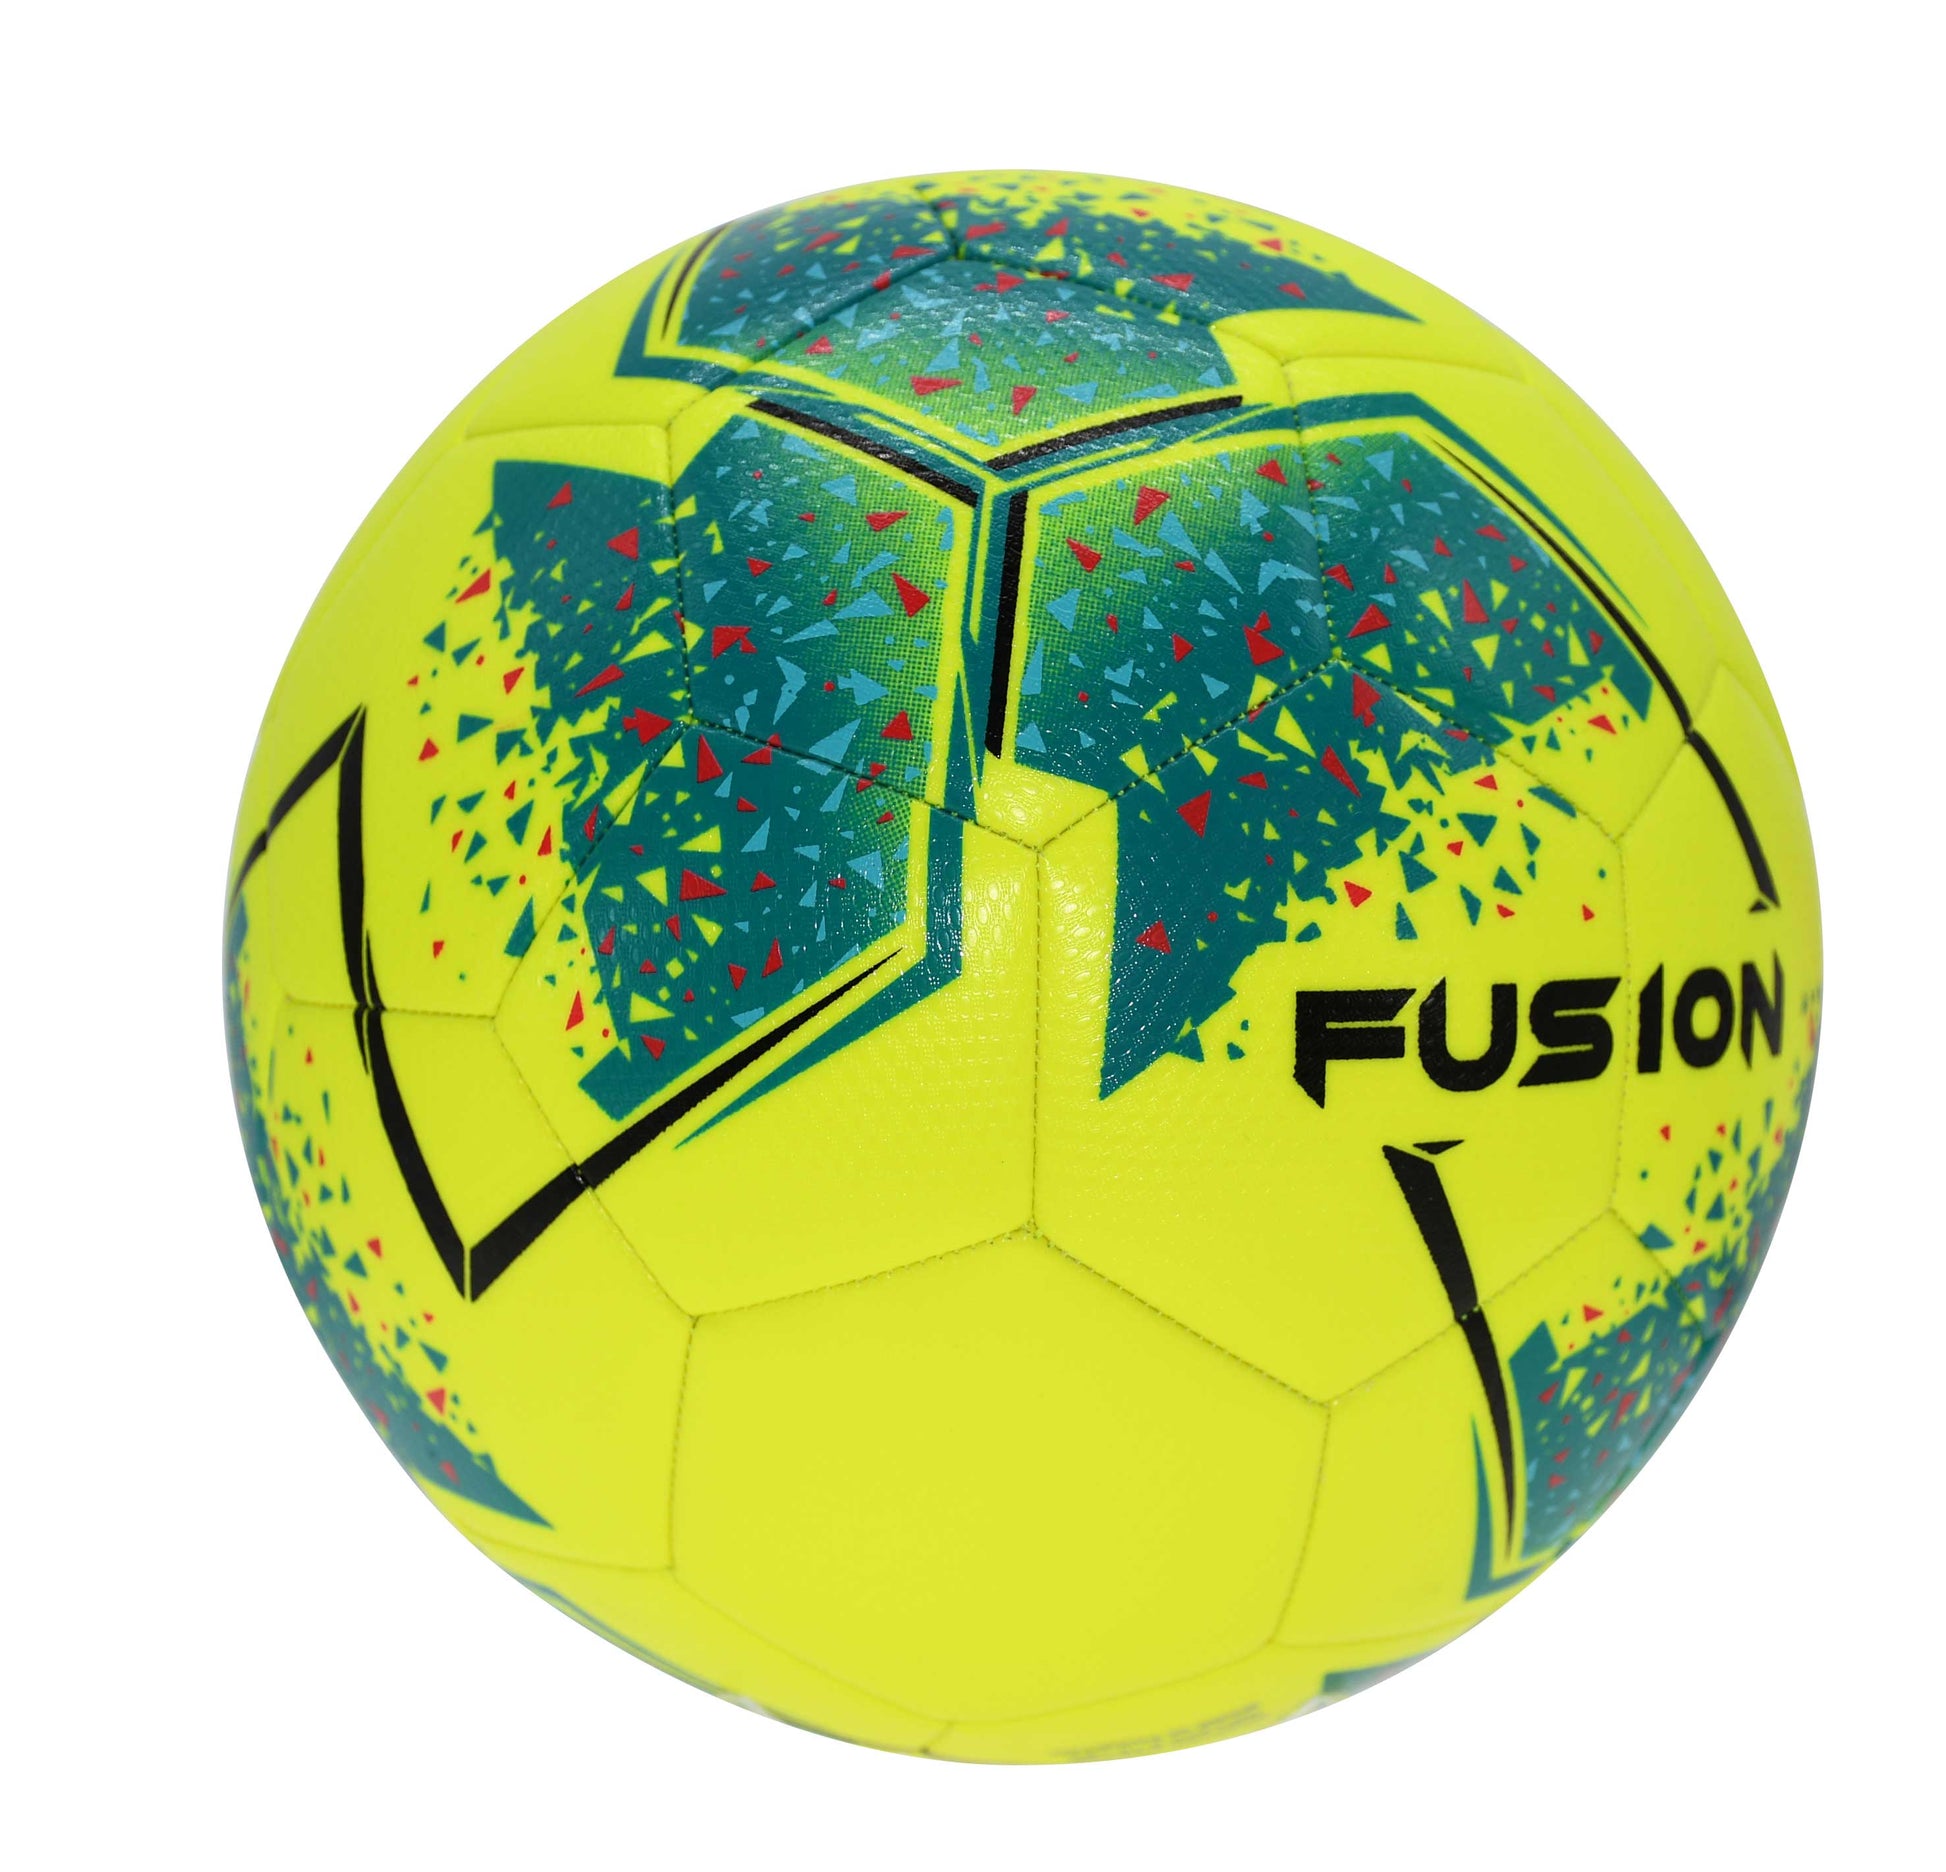 Precision Fusion Training Footballs